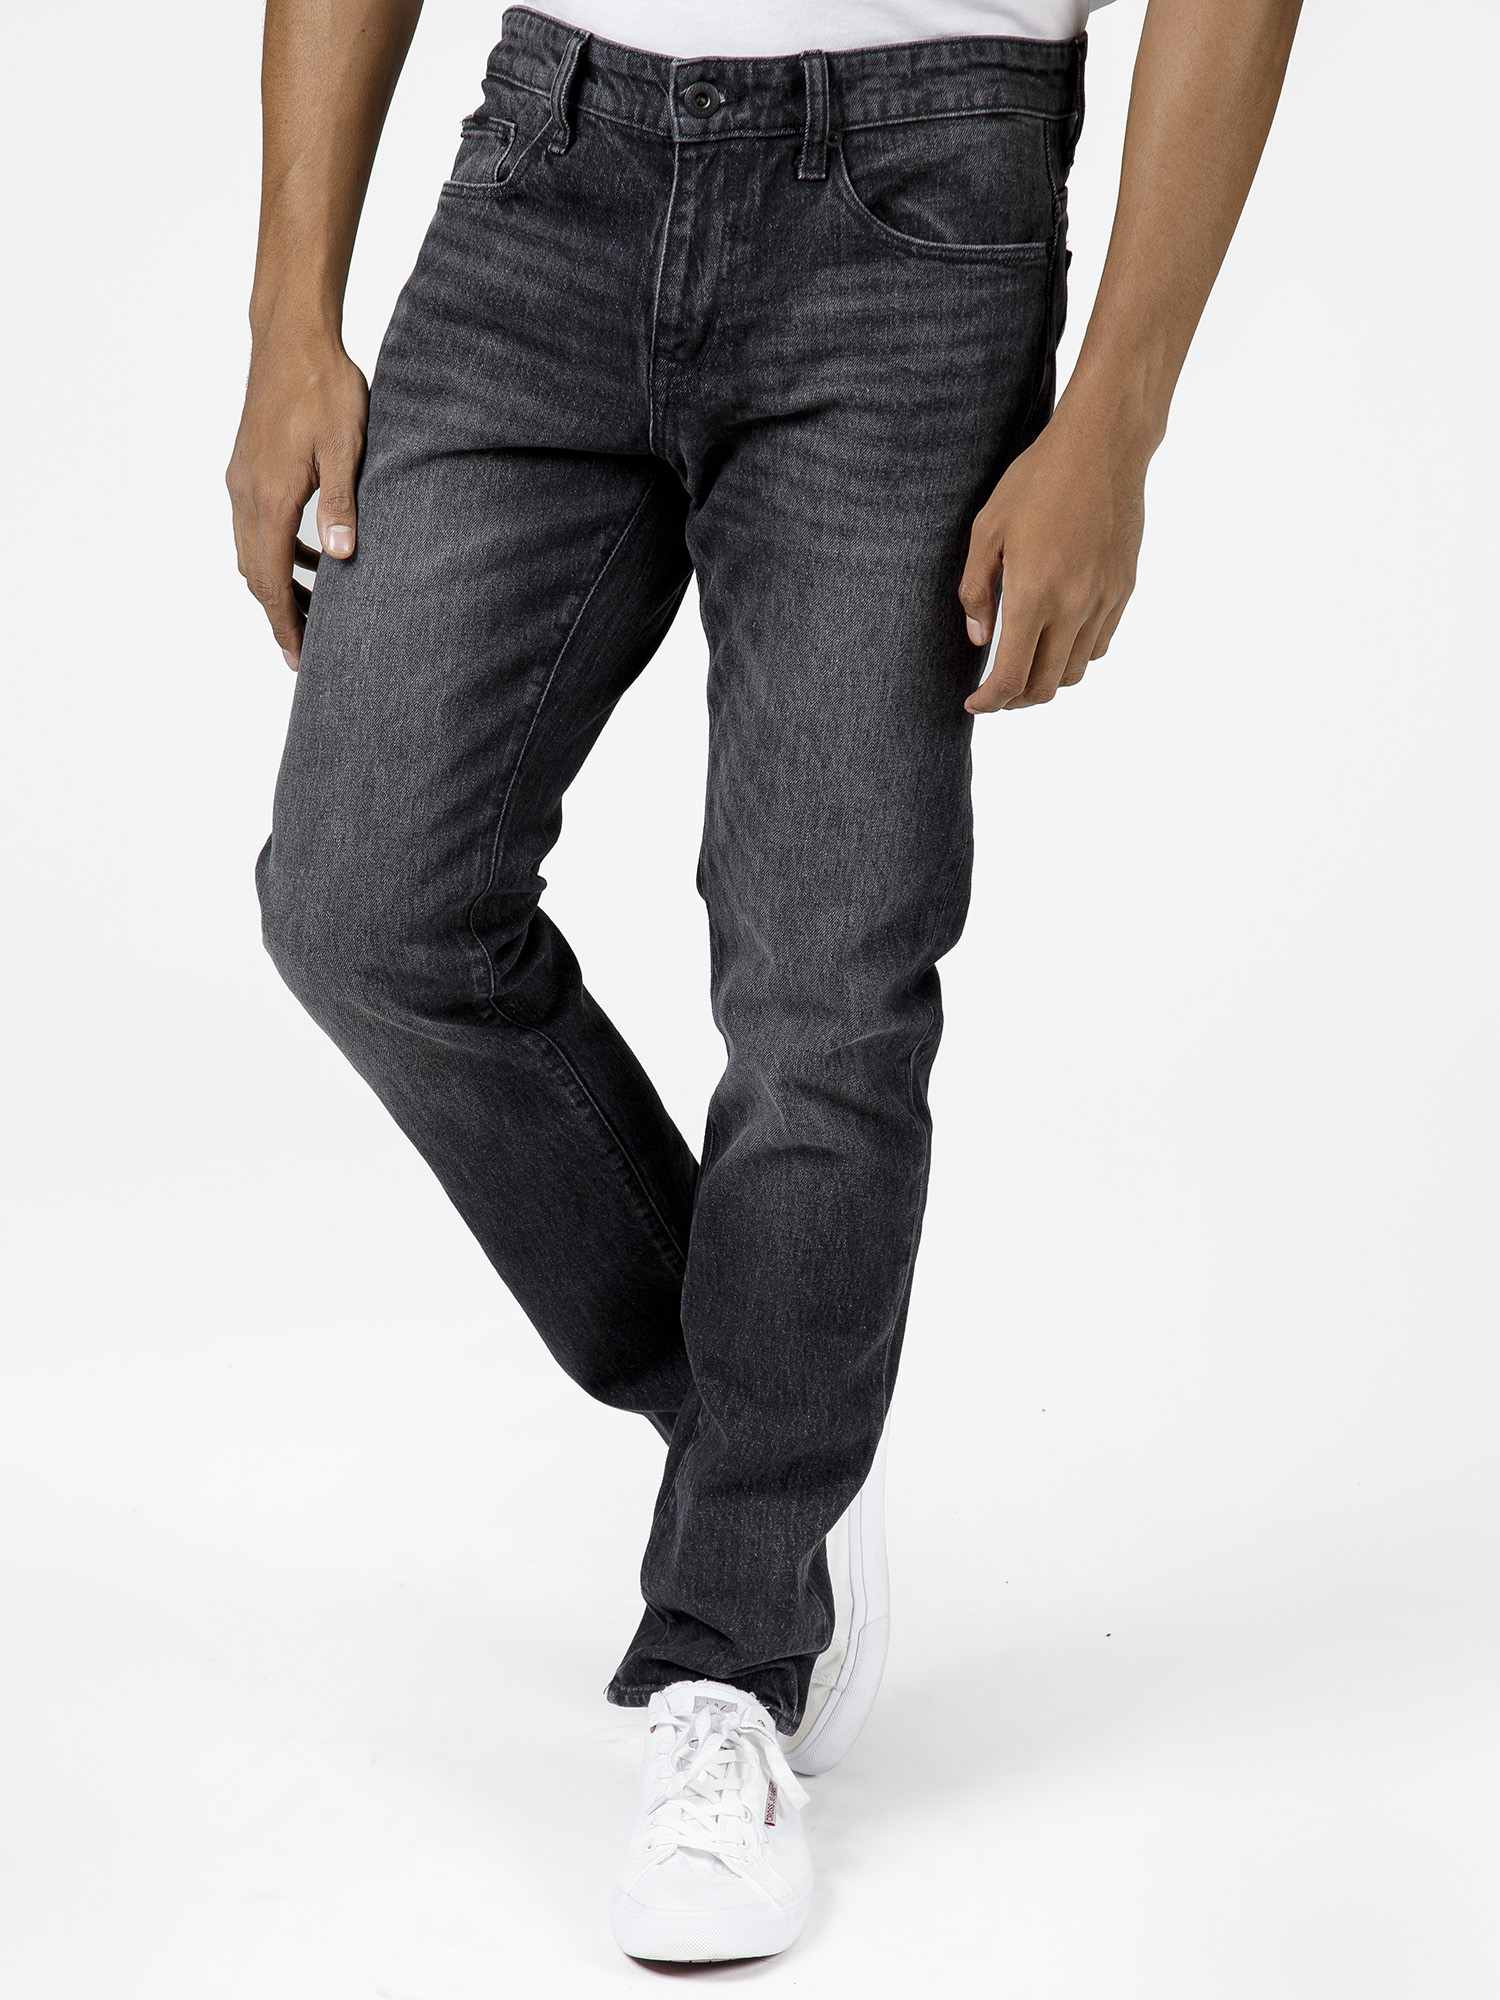 Джинсы Cross Jeans для мужчин, F 152-110, размер 31-30, чёрные